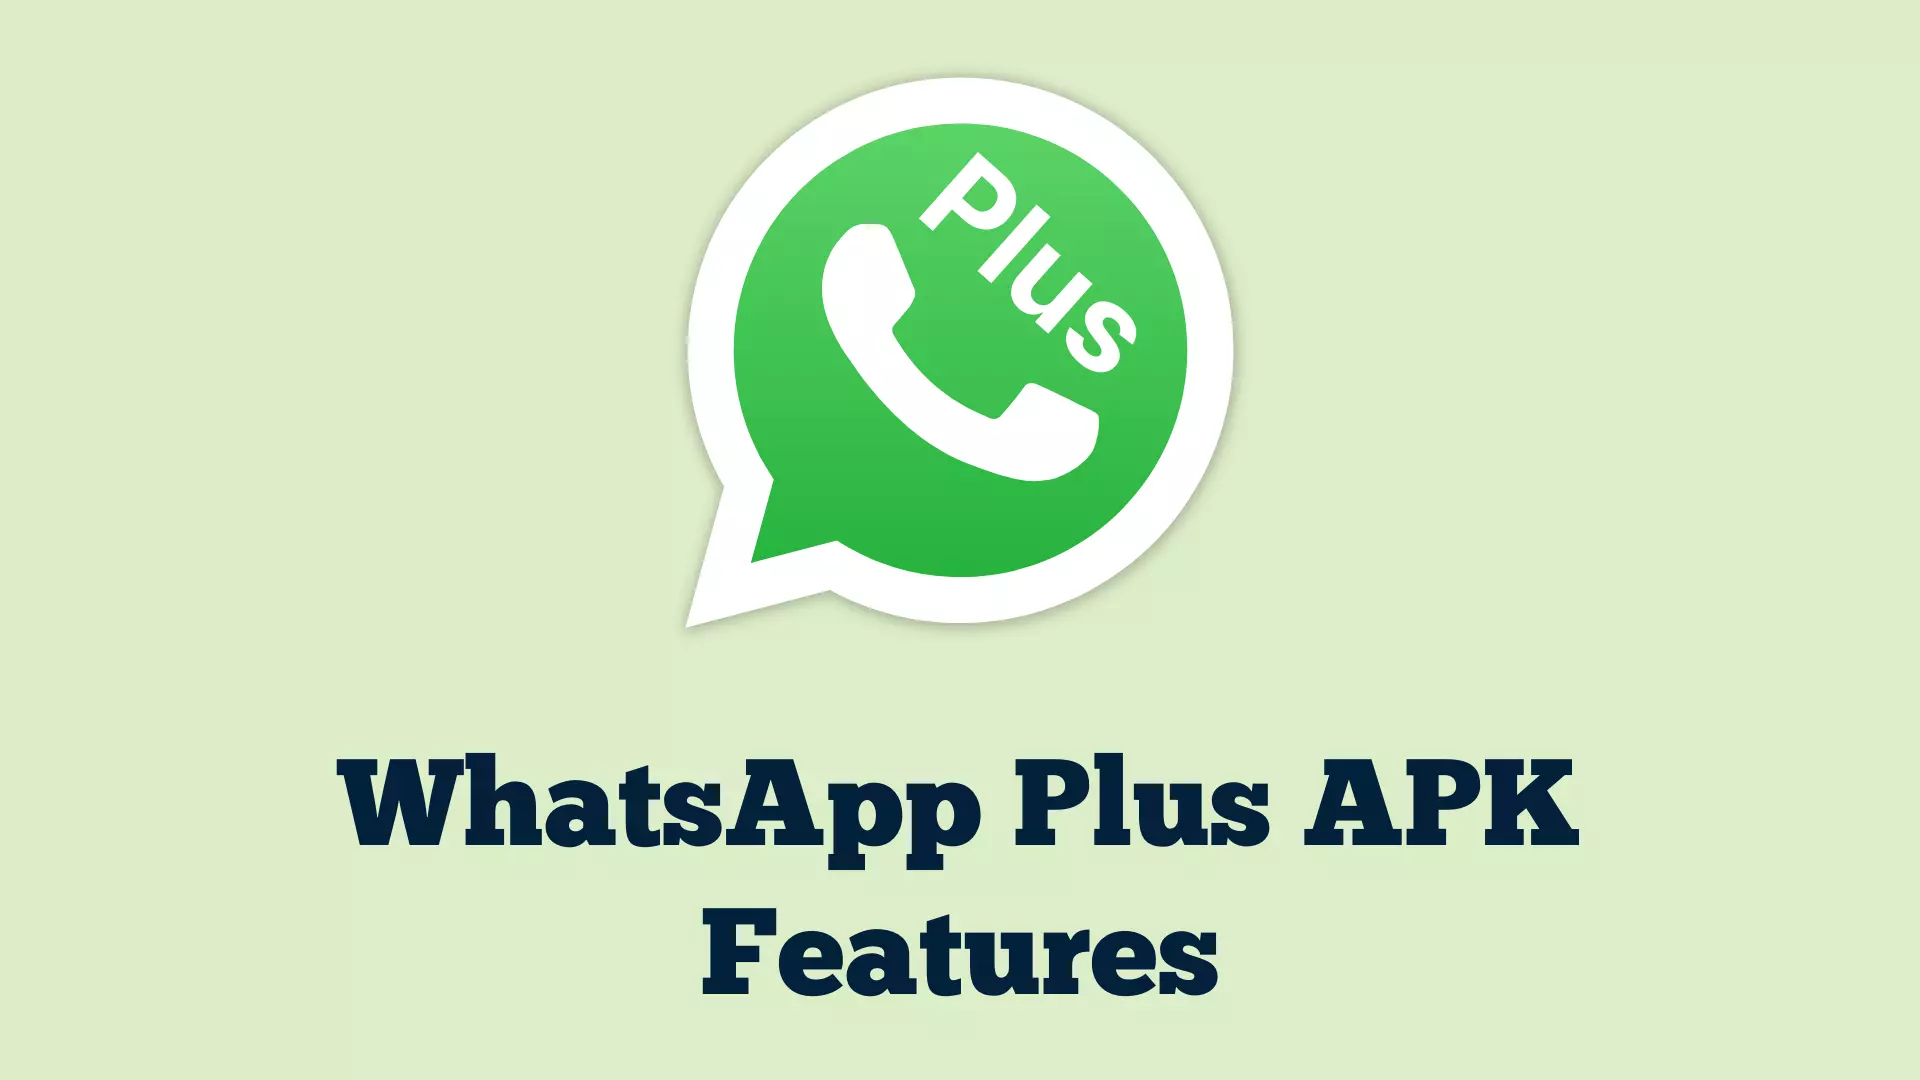 WhatsApp Plus APK Features